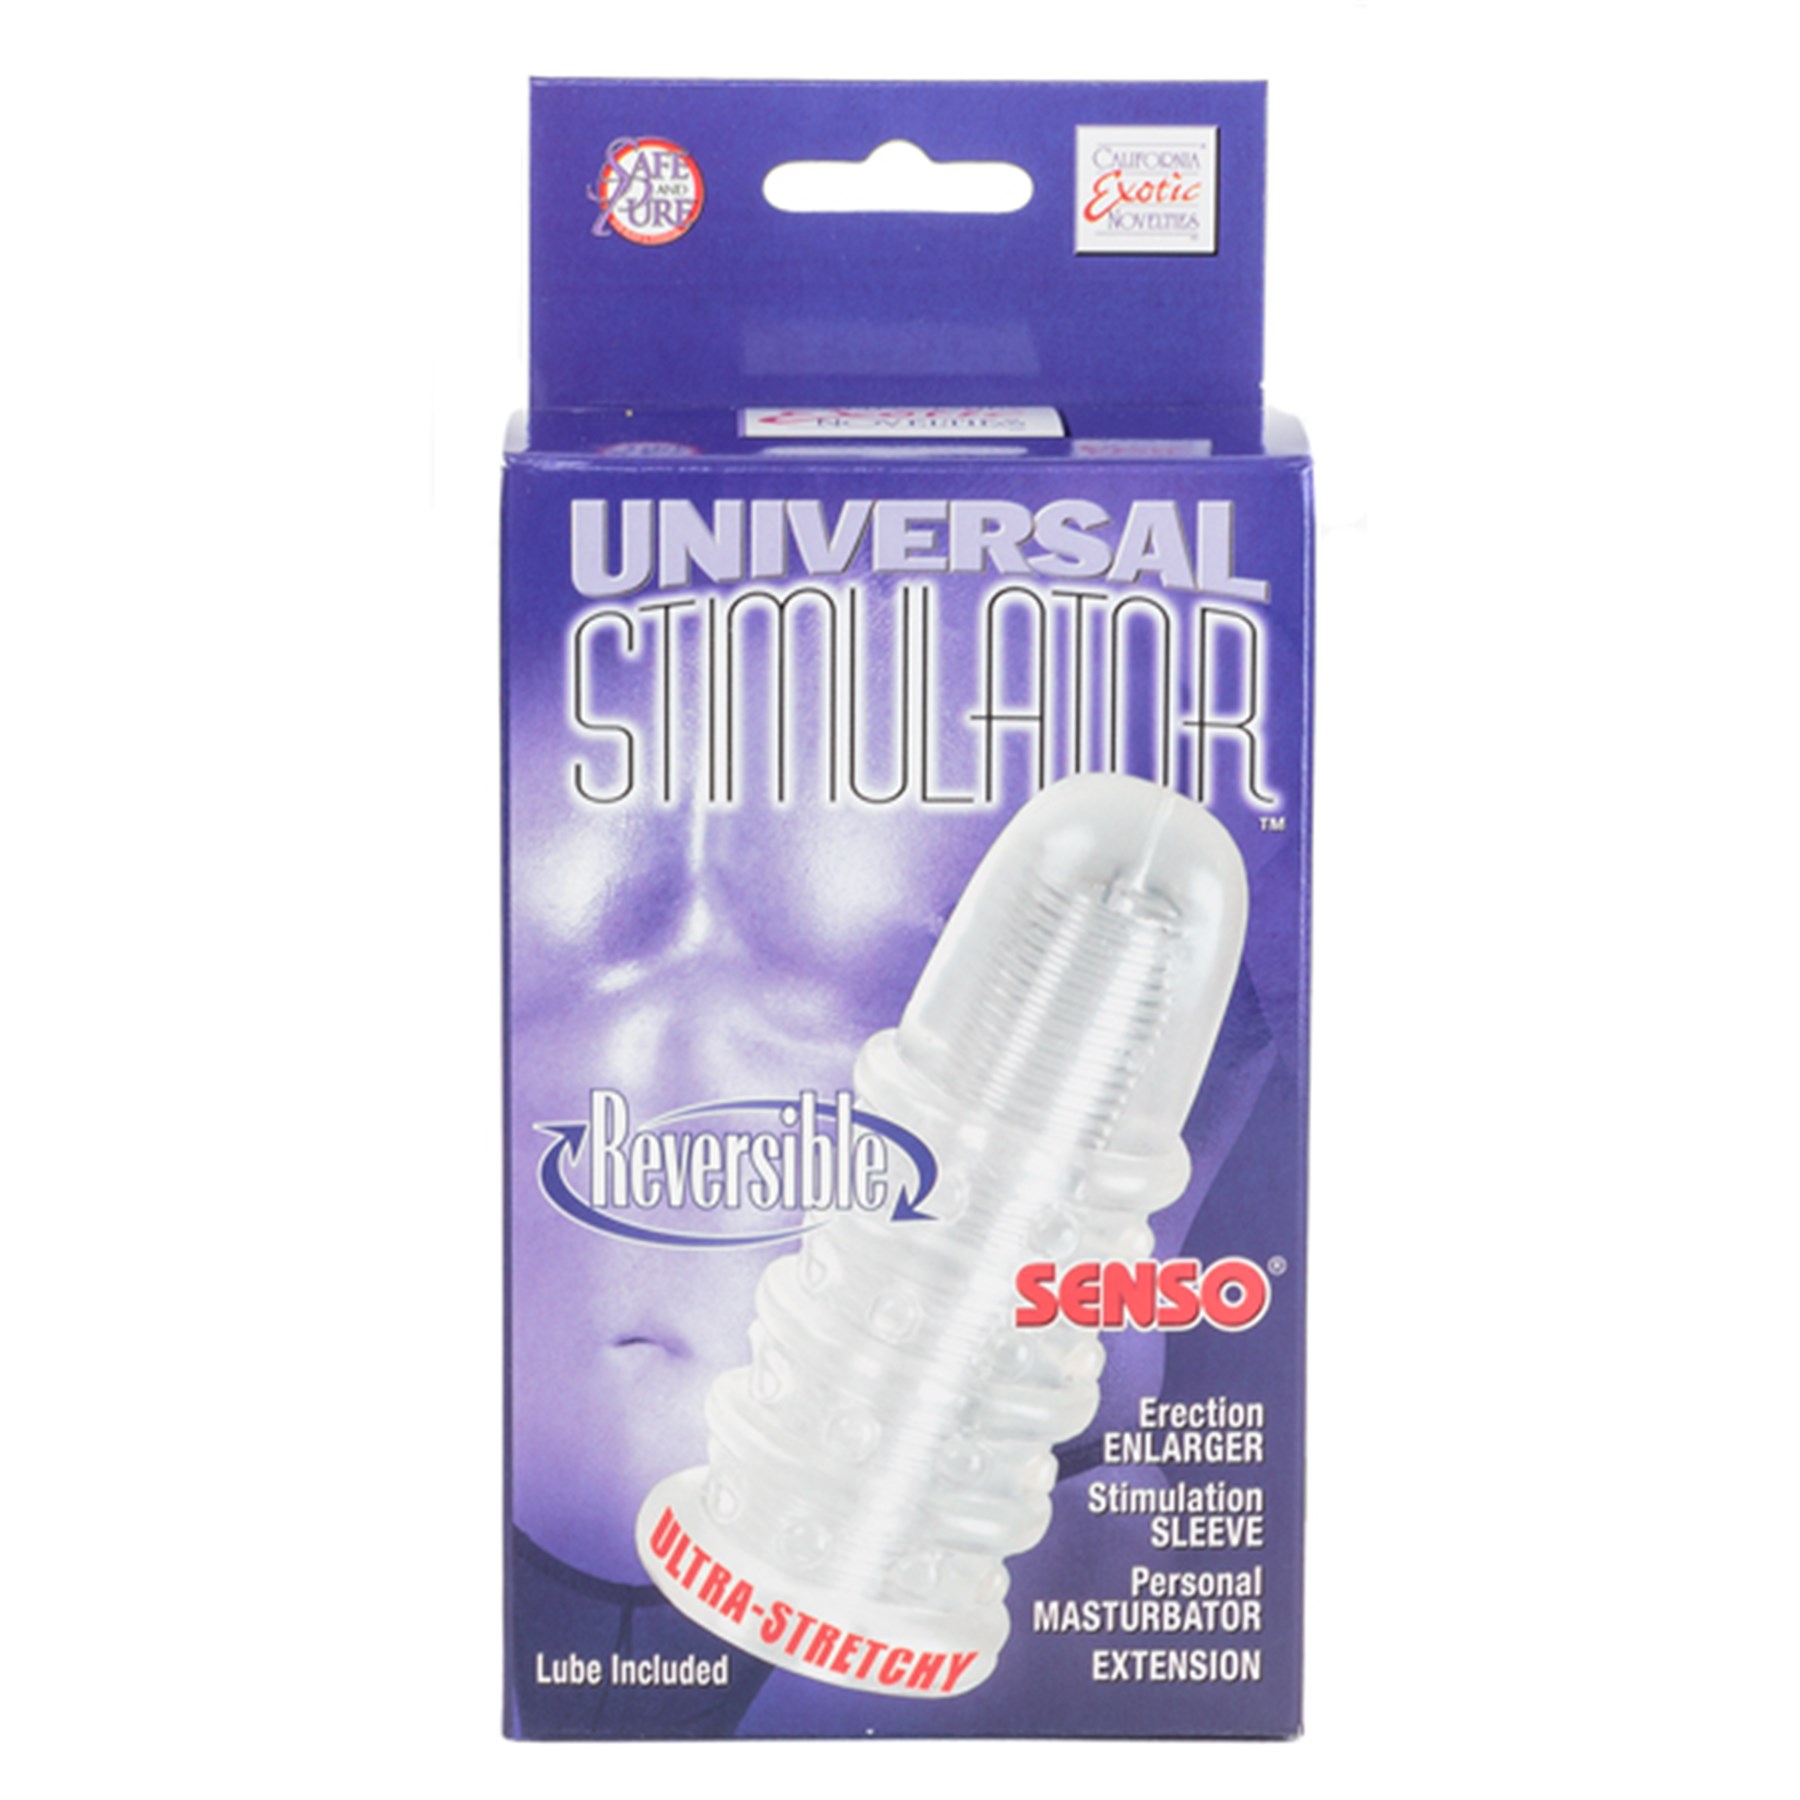 Universal Stimulator packaging